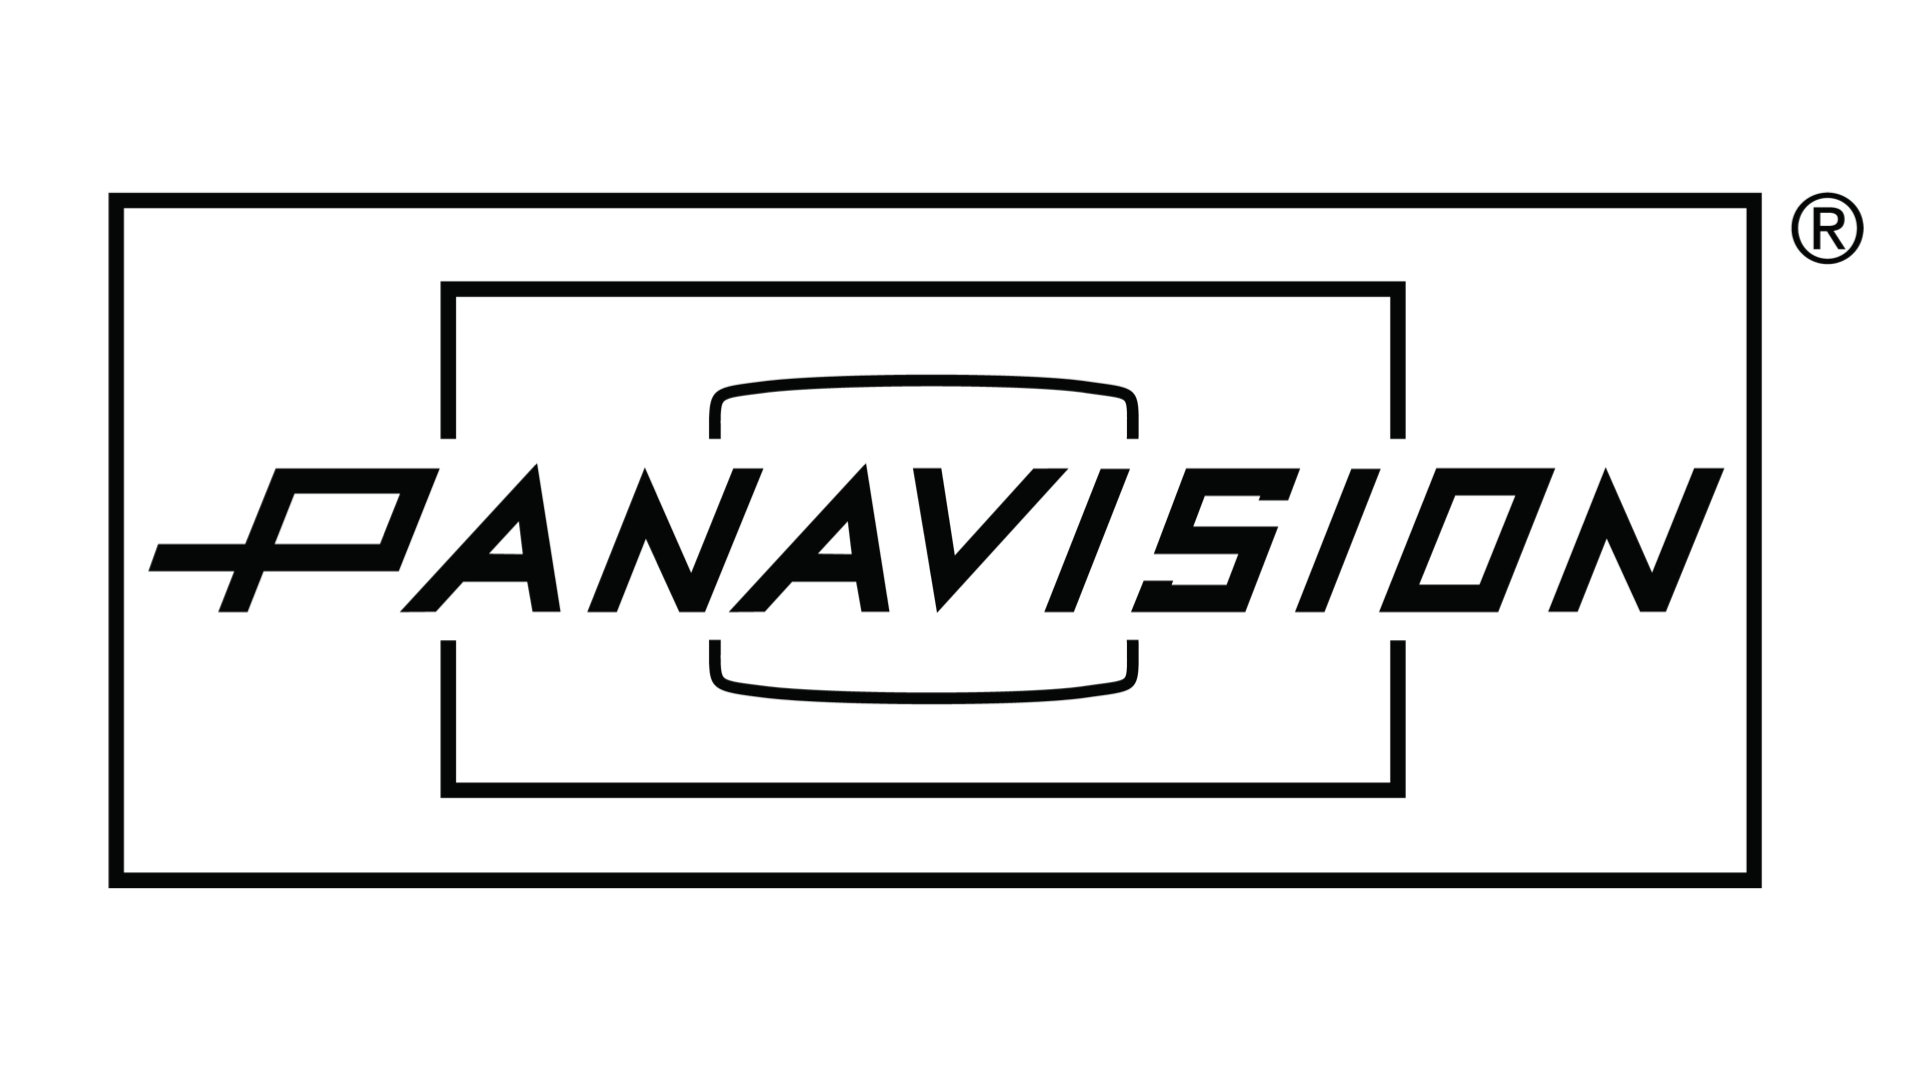 https://www.panavision.com/images/default-source/articles/images/panavision-logo.001.jpeg?sfvrsn=efeb28a8_3